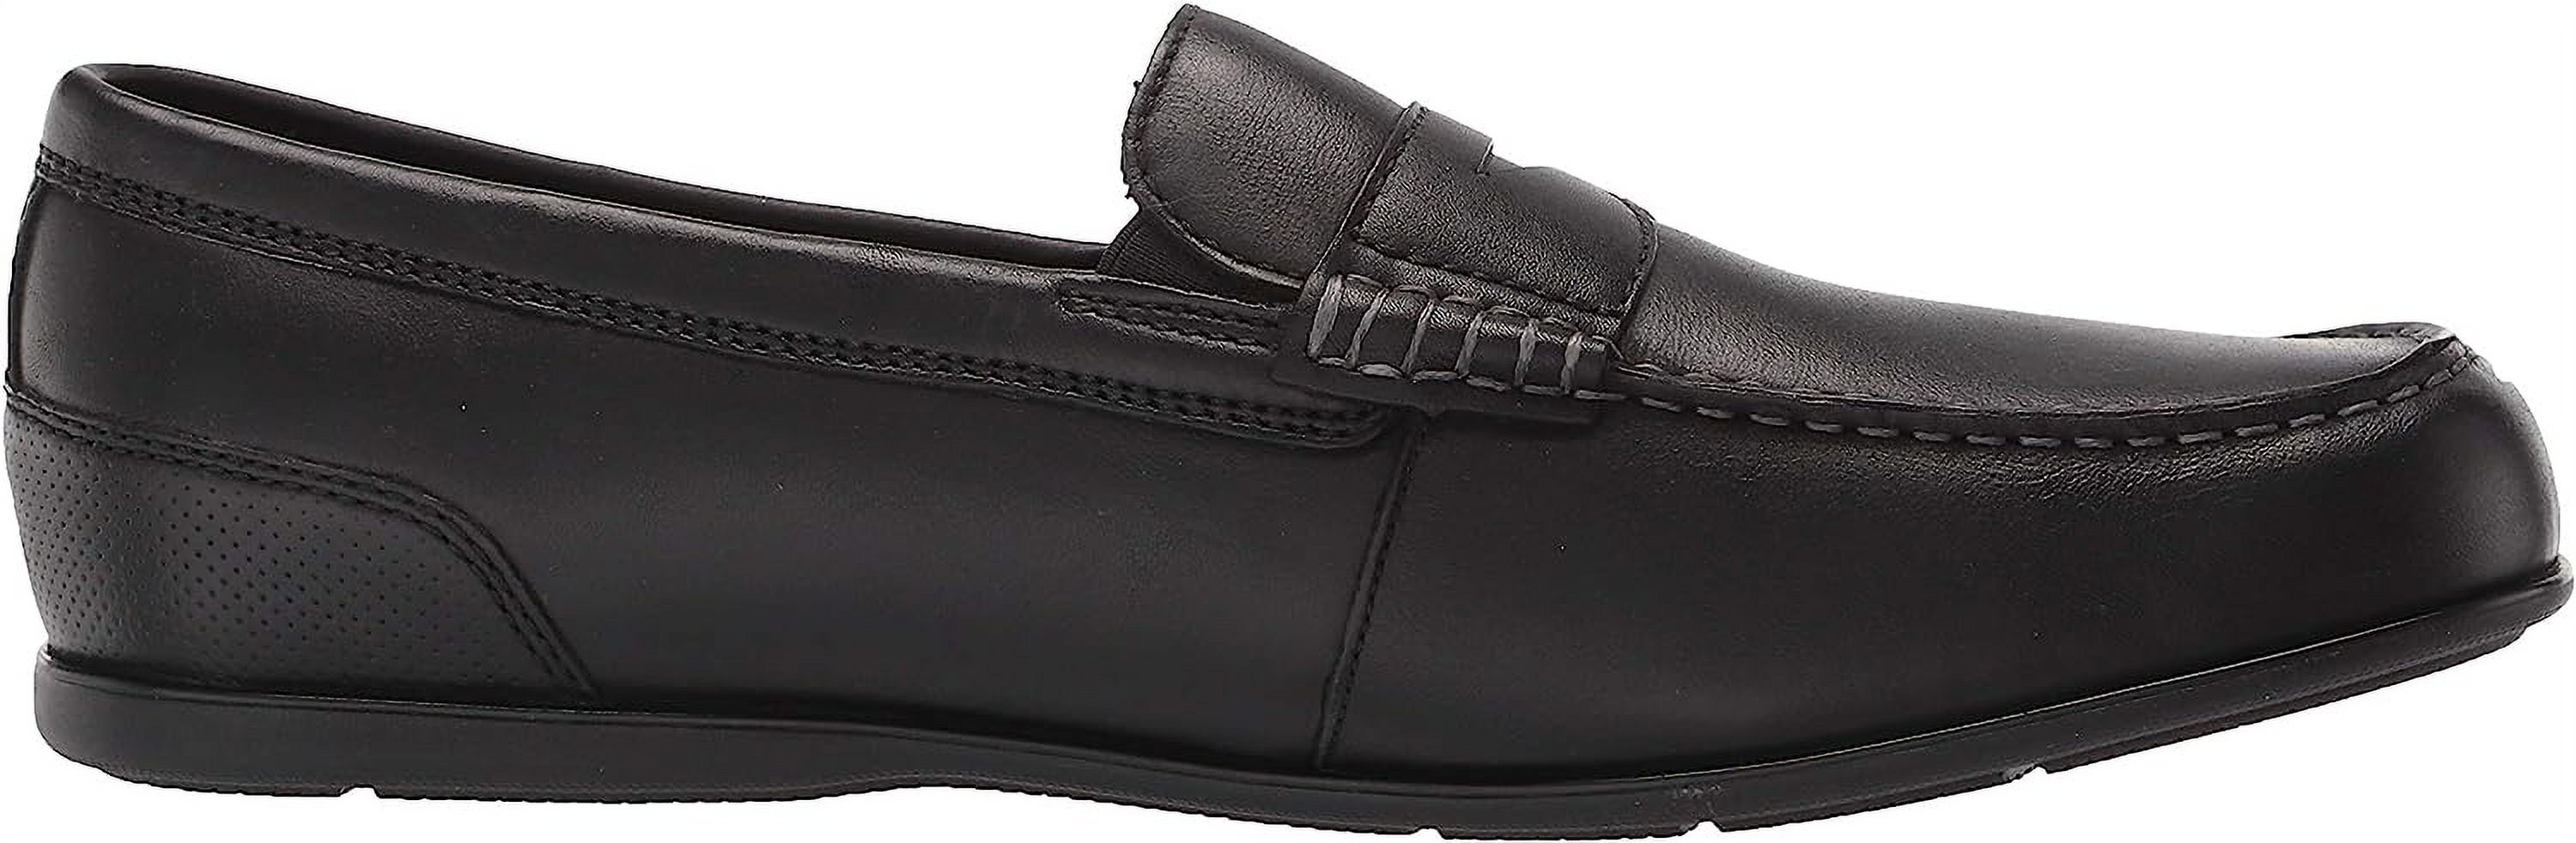 Rockport Malcom Penny Men's Black Loafers 9.5W - Walmart.com